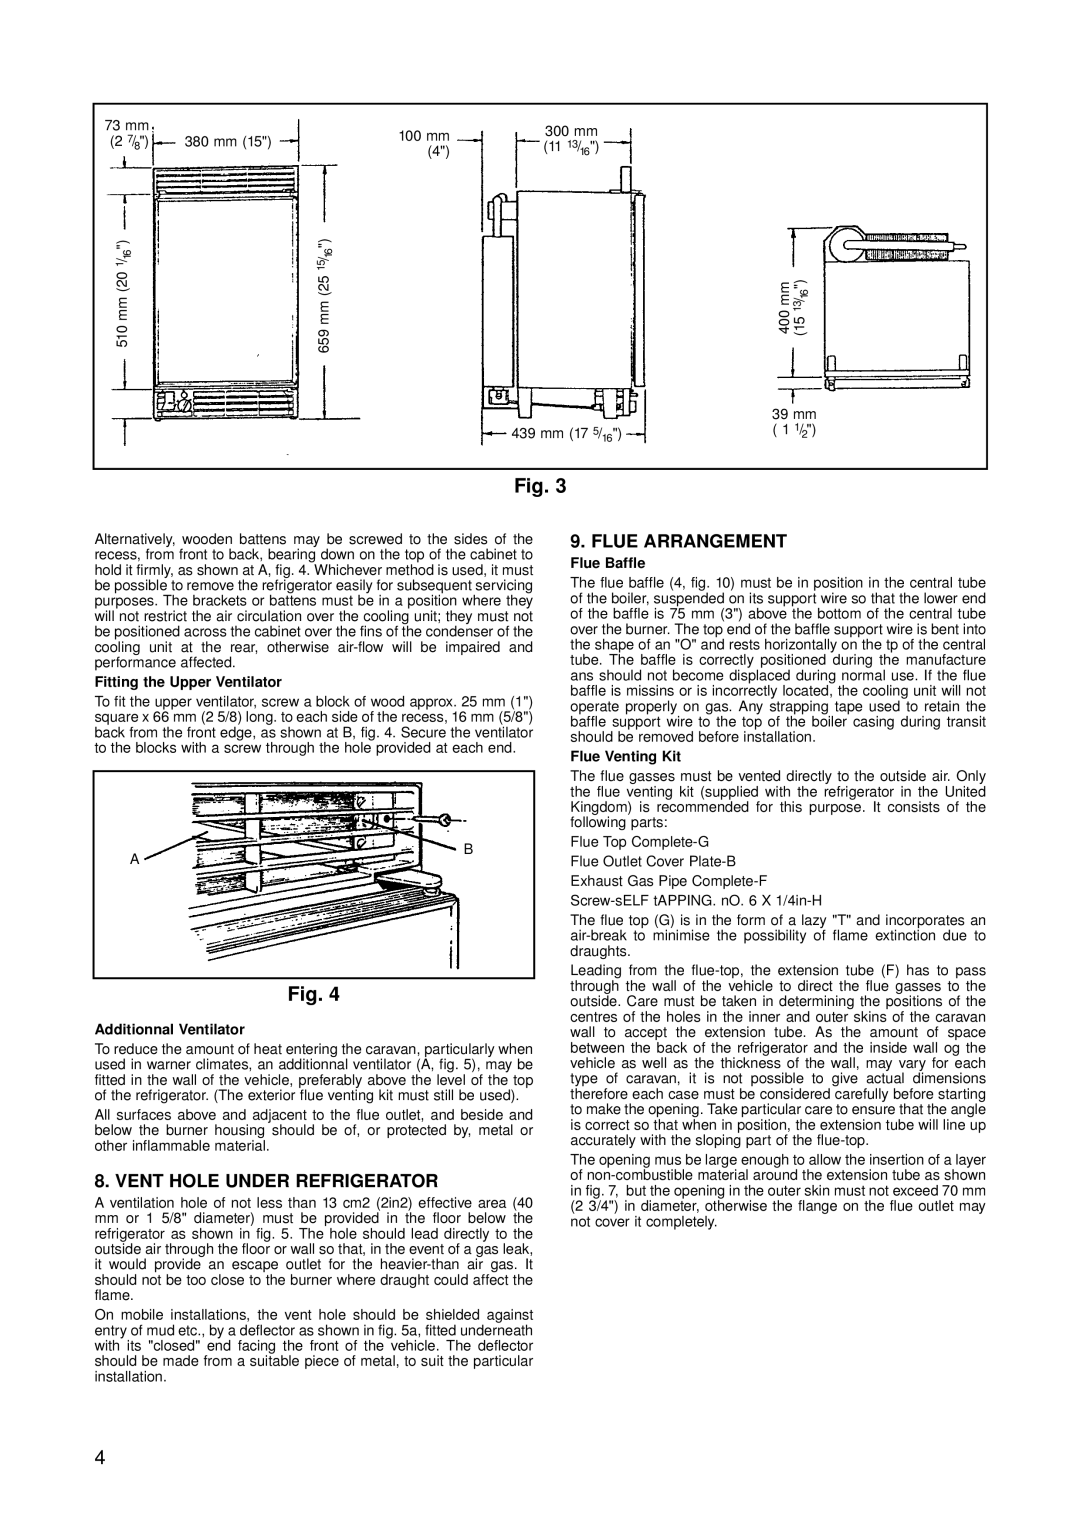 Dometic RM 123E Vent Hole Under Refrigerator, Flue Arrangement, Fitting the Upper Ventilator, Additionnal Ventilator 